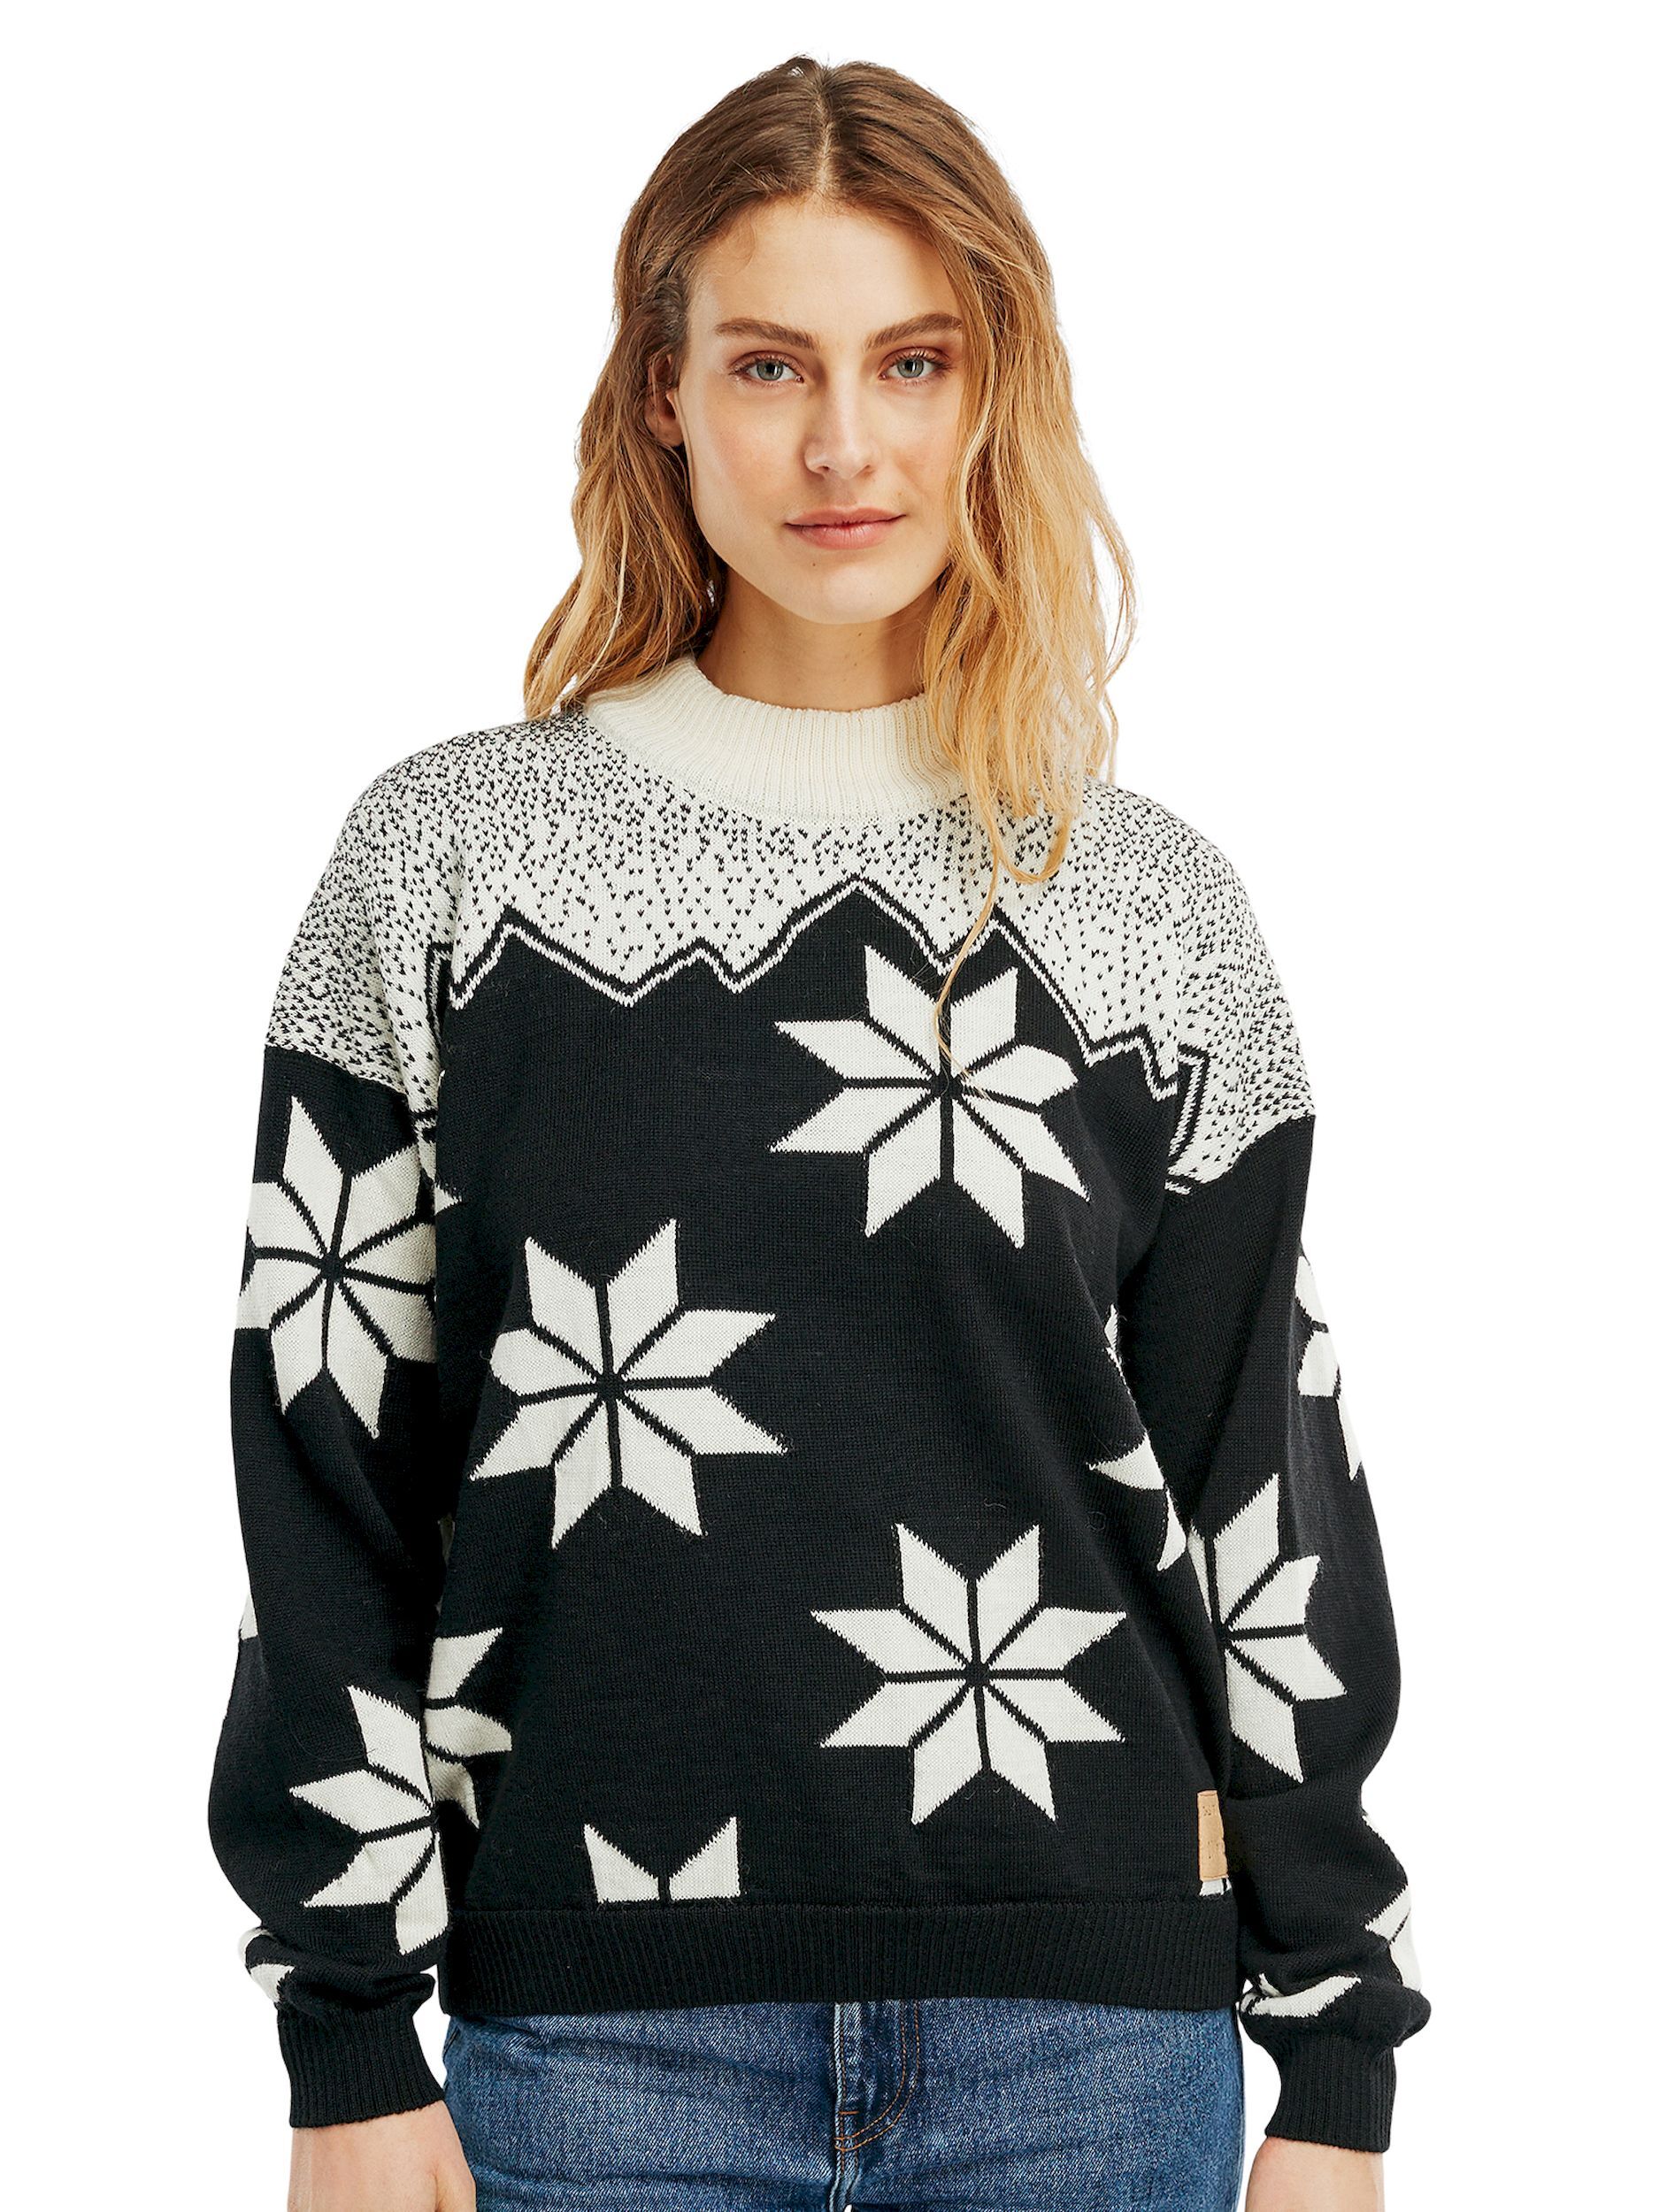 Dale of Norway Winter Star Feminine Sweater - Pullover - Damen